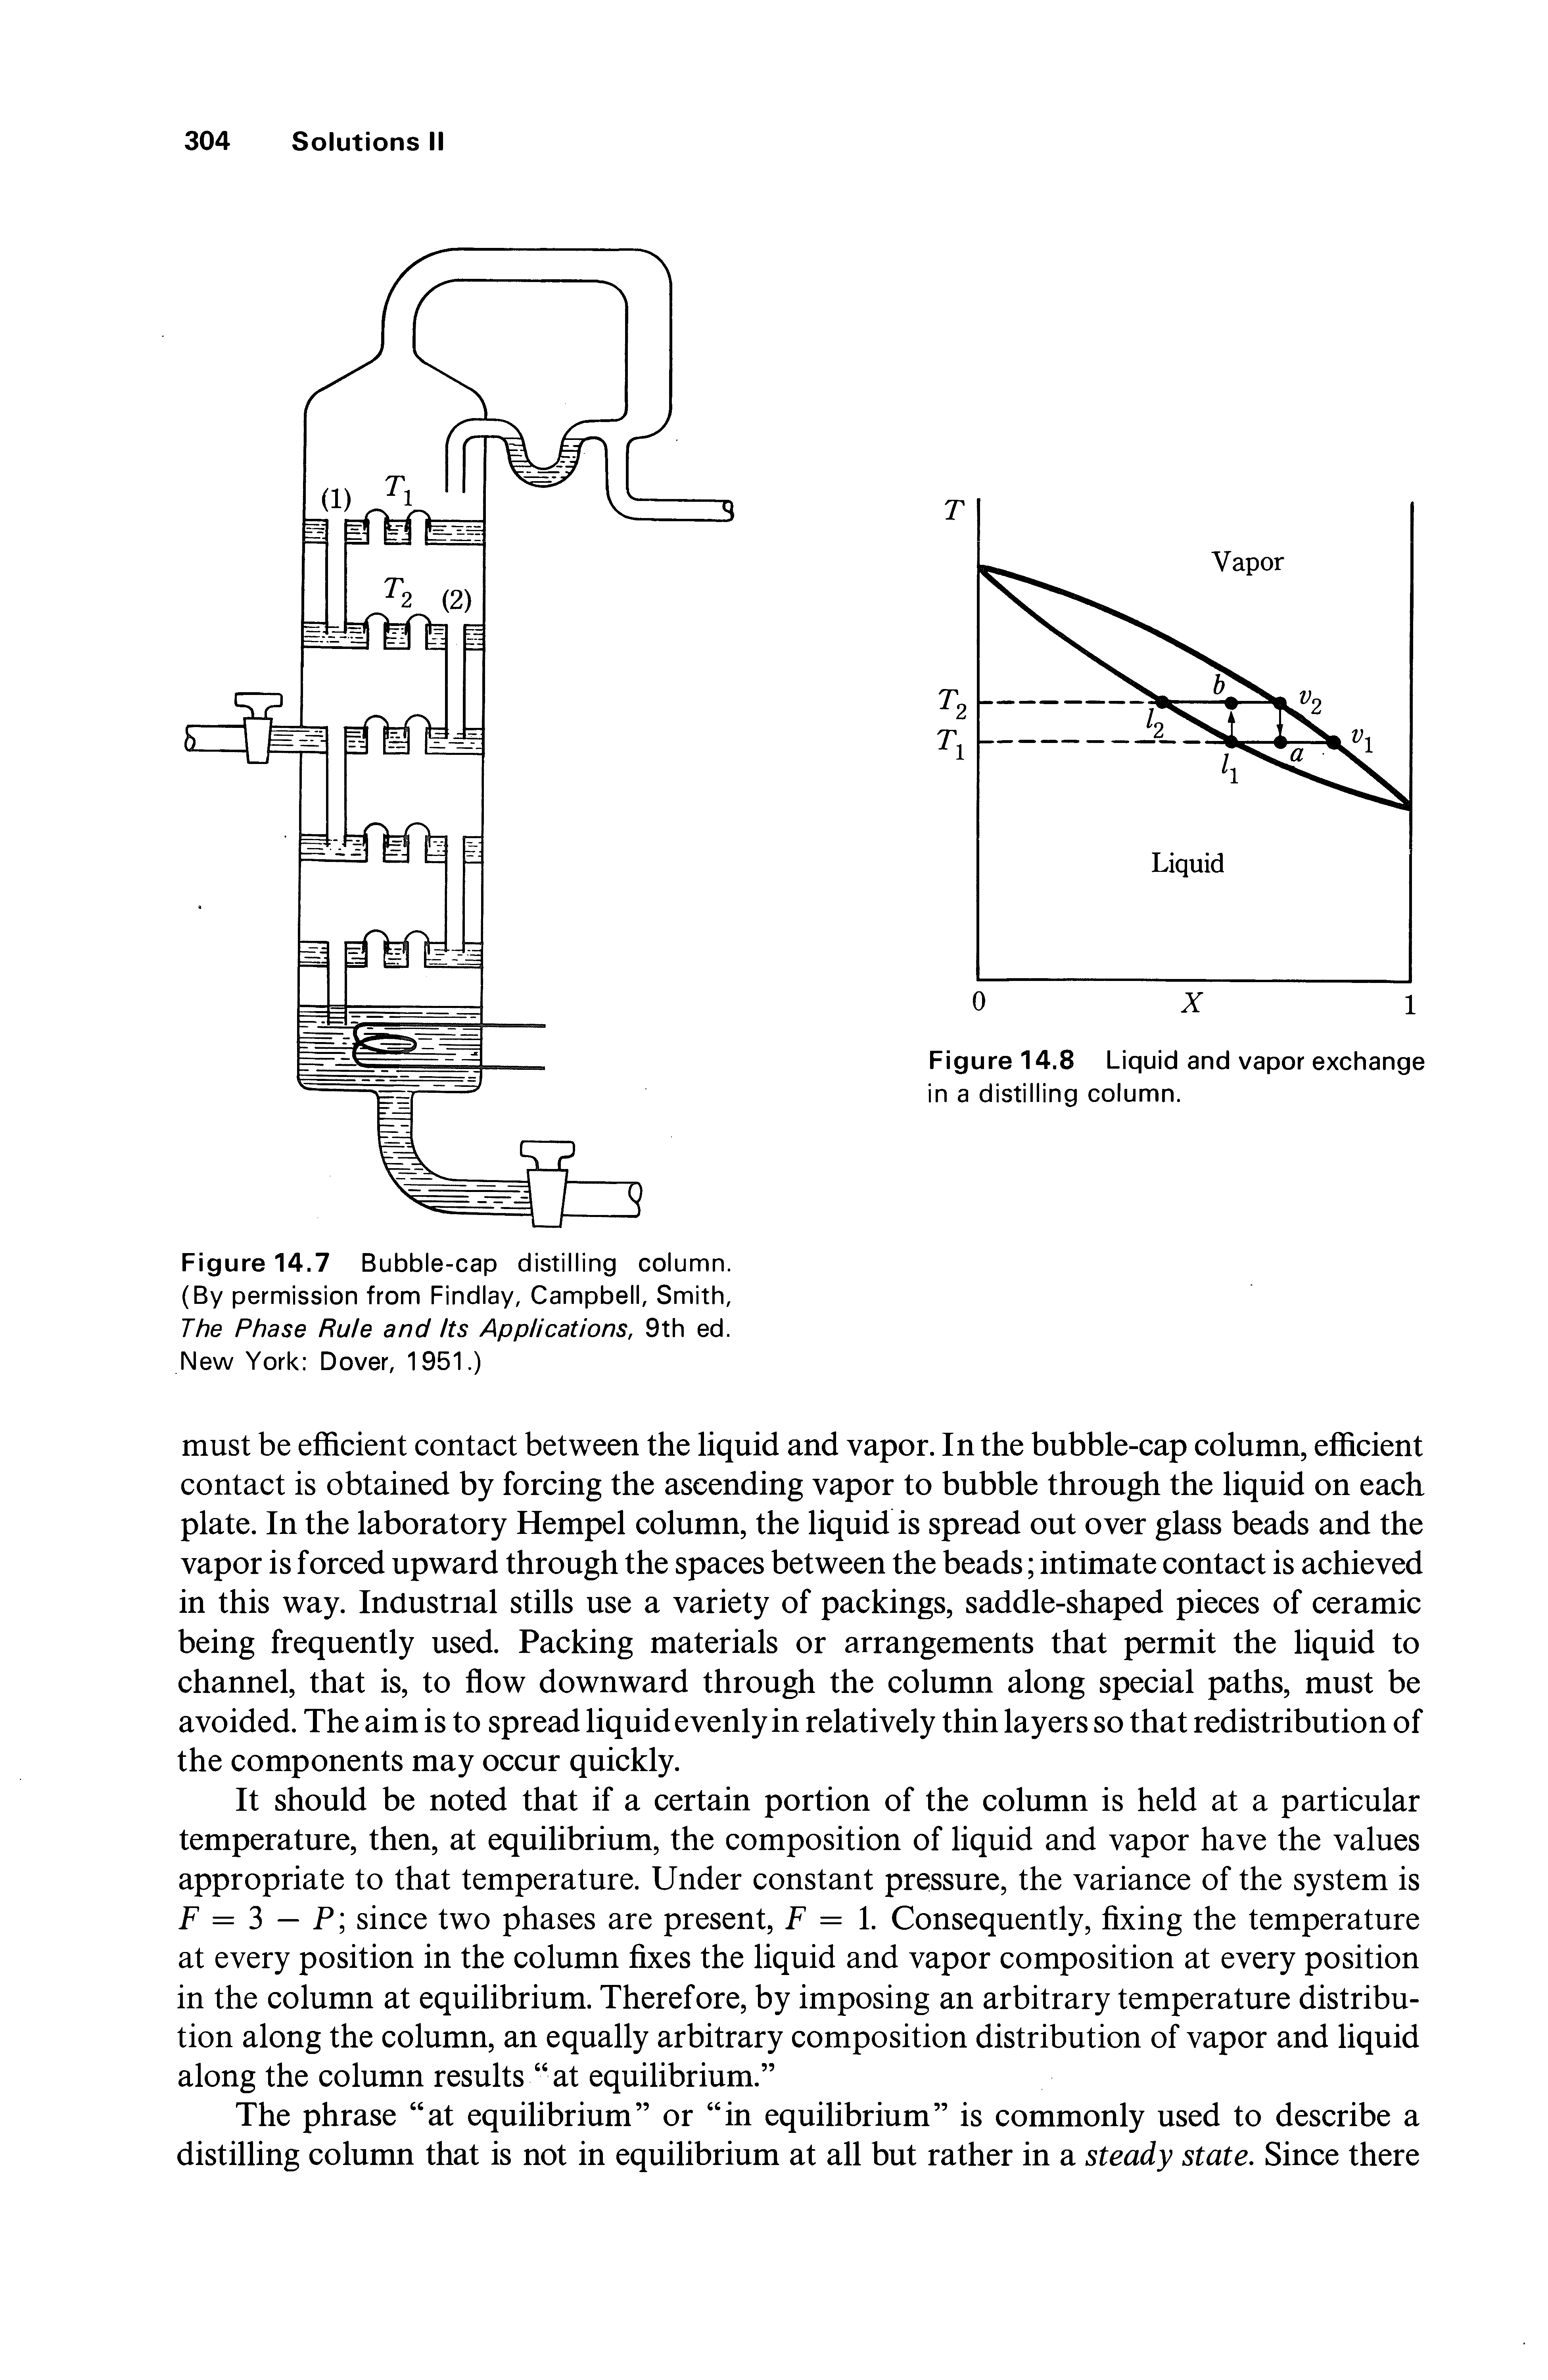 Figure 14.8 Liquid and vapor exchange in a distilling column.